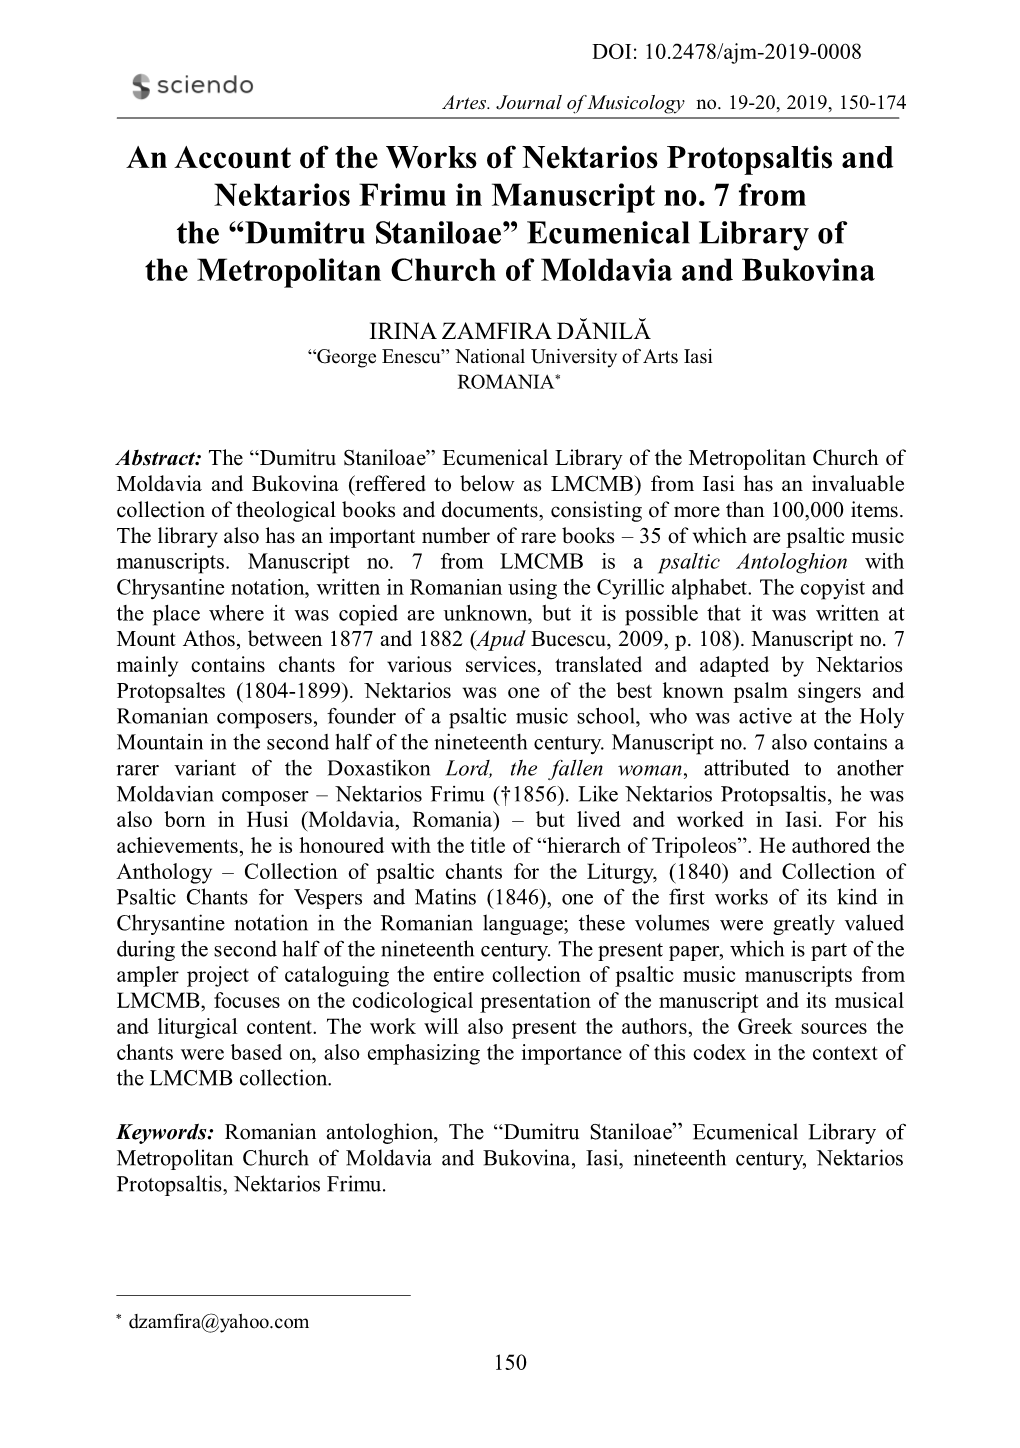 An Account of the Works of Nektarios Protopsaltis and Nektarios Frimu in Manuscript No